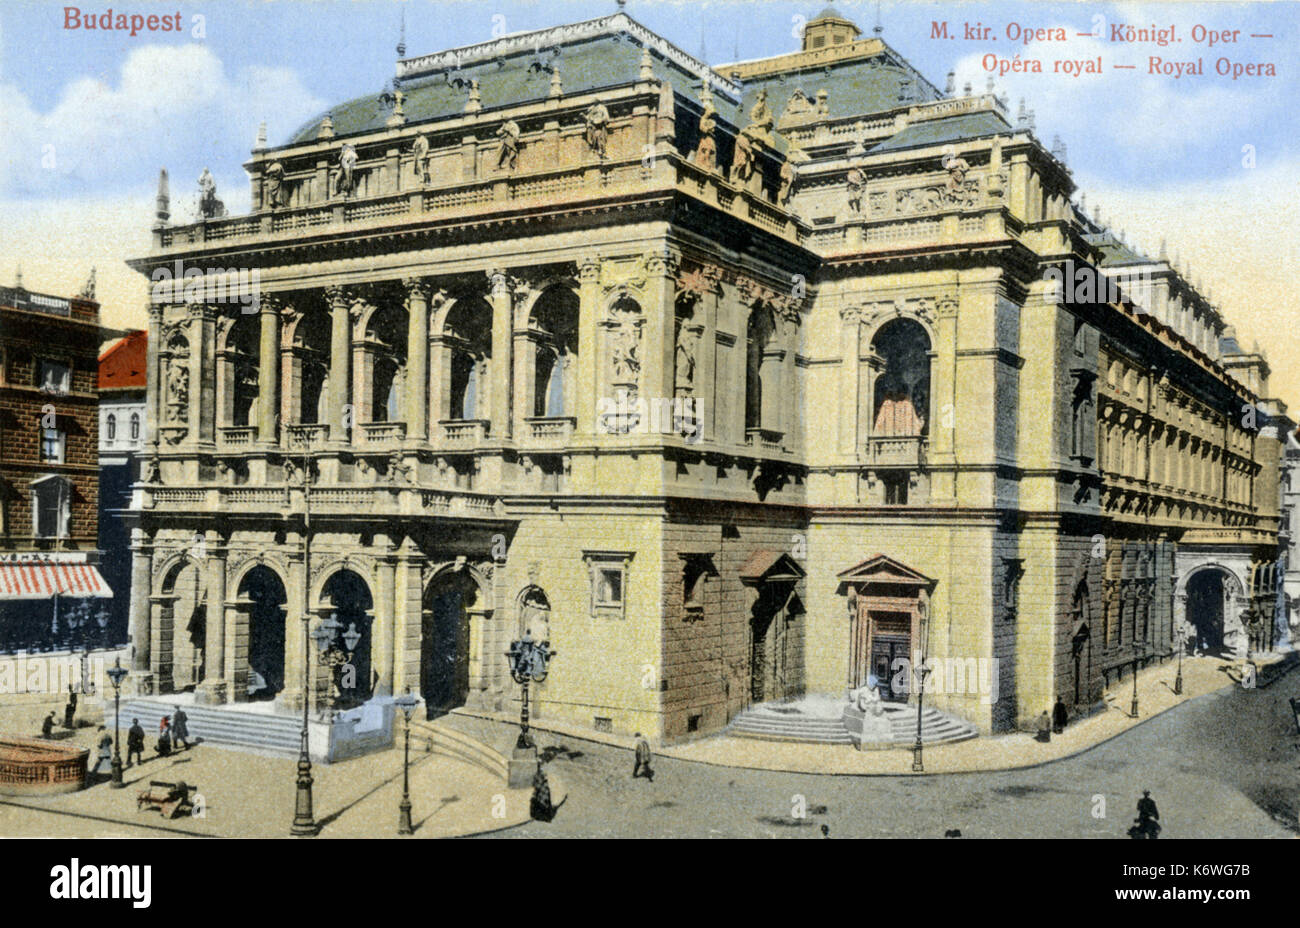 BUDAPEST - ROYAL OPERA HOUSE - inizio xx secolo esterno Foto Stock